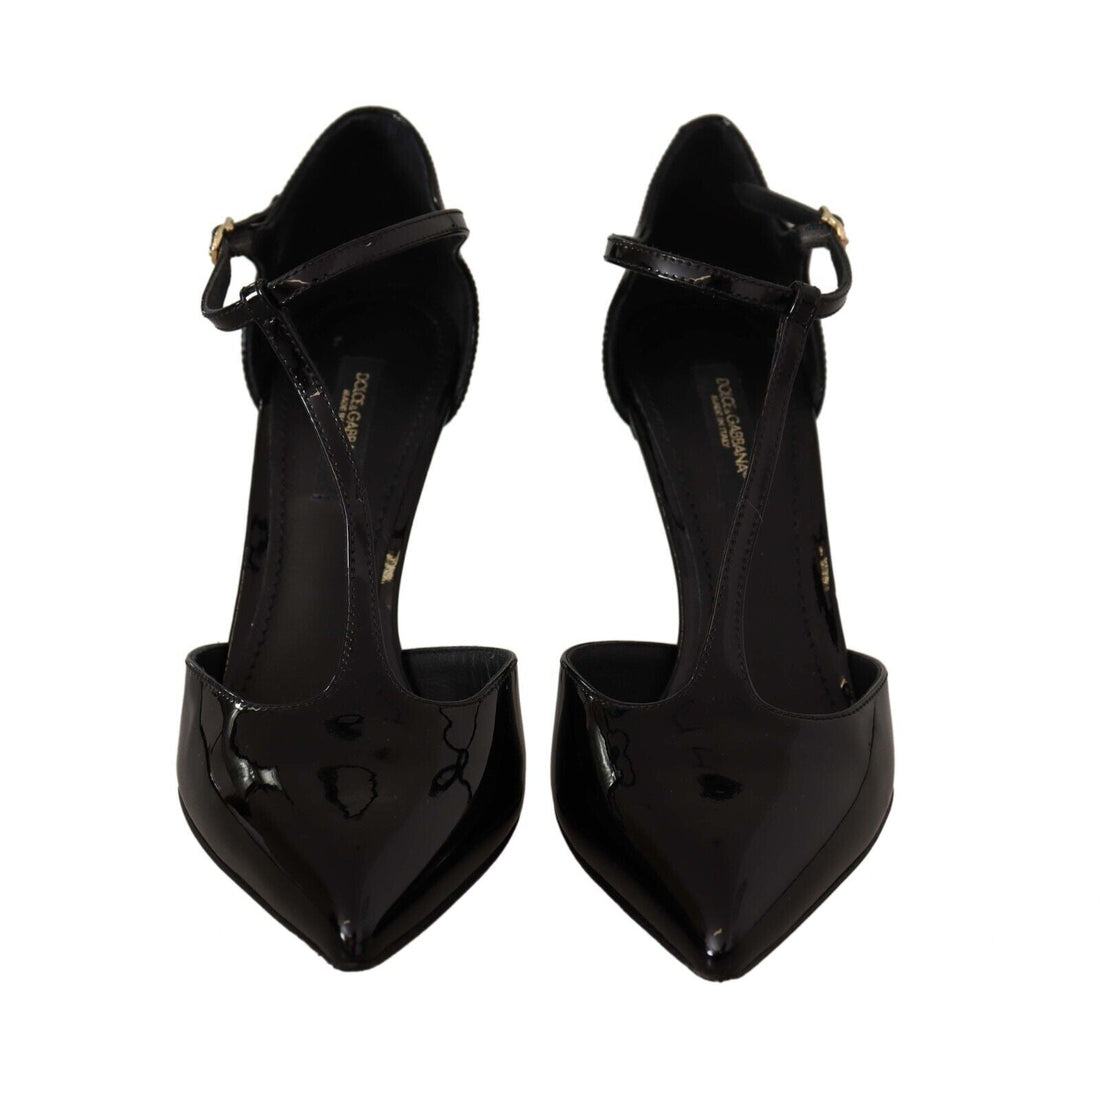 Dolce & Gabbana Black Patent Leather T-Strap Heels Sandals Shoes